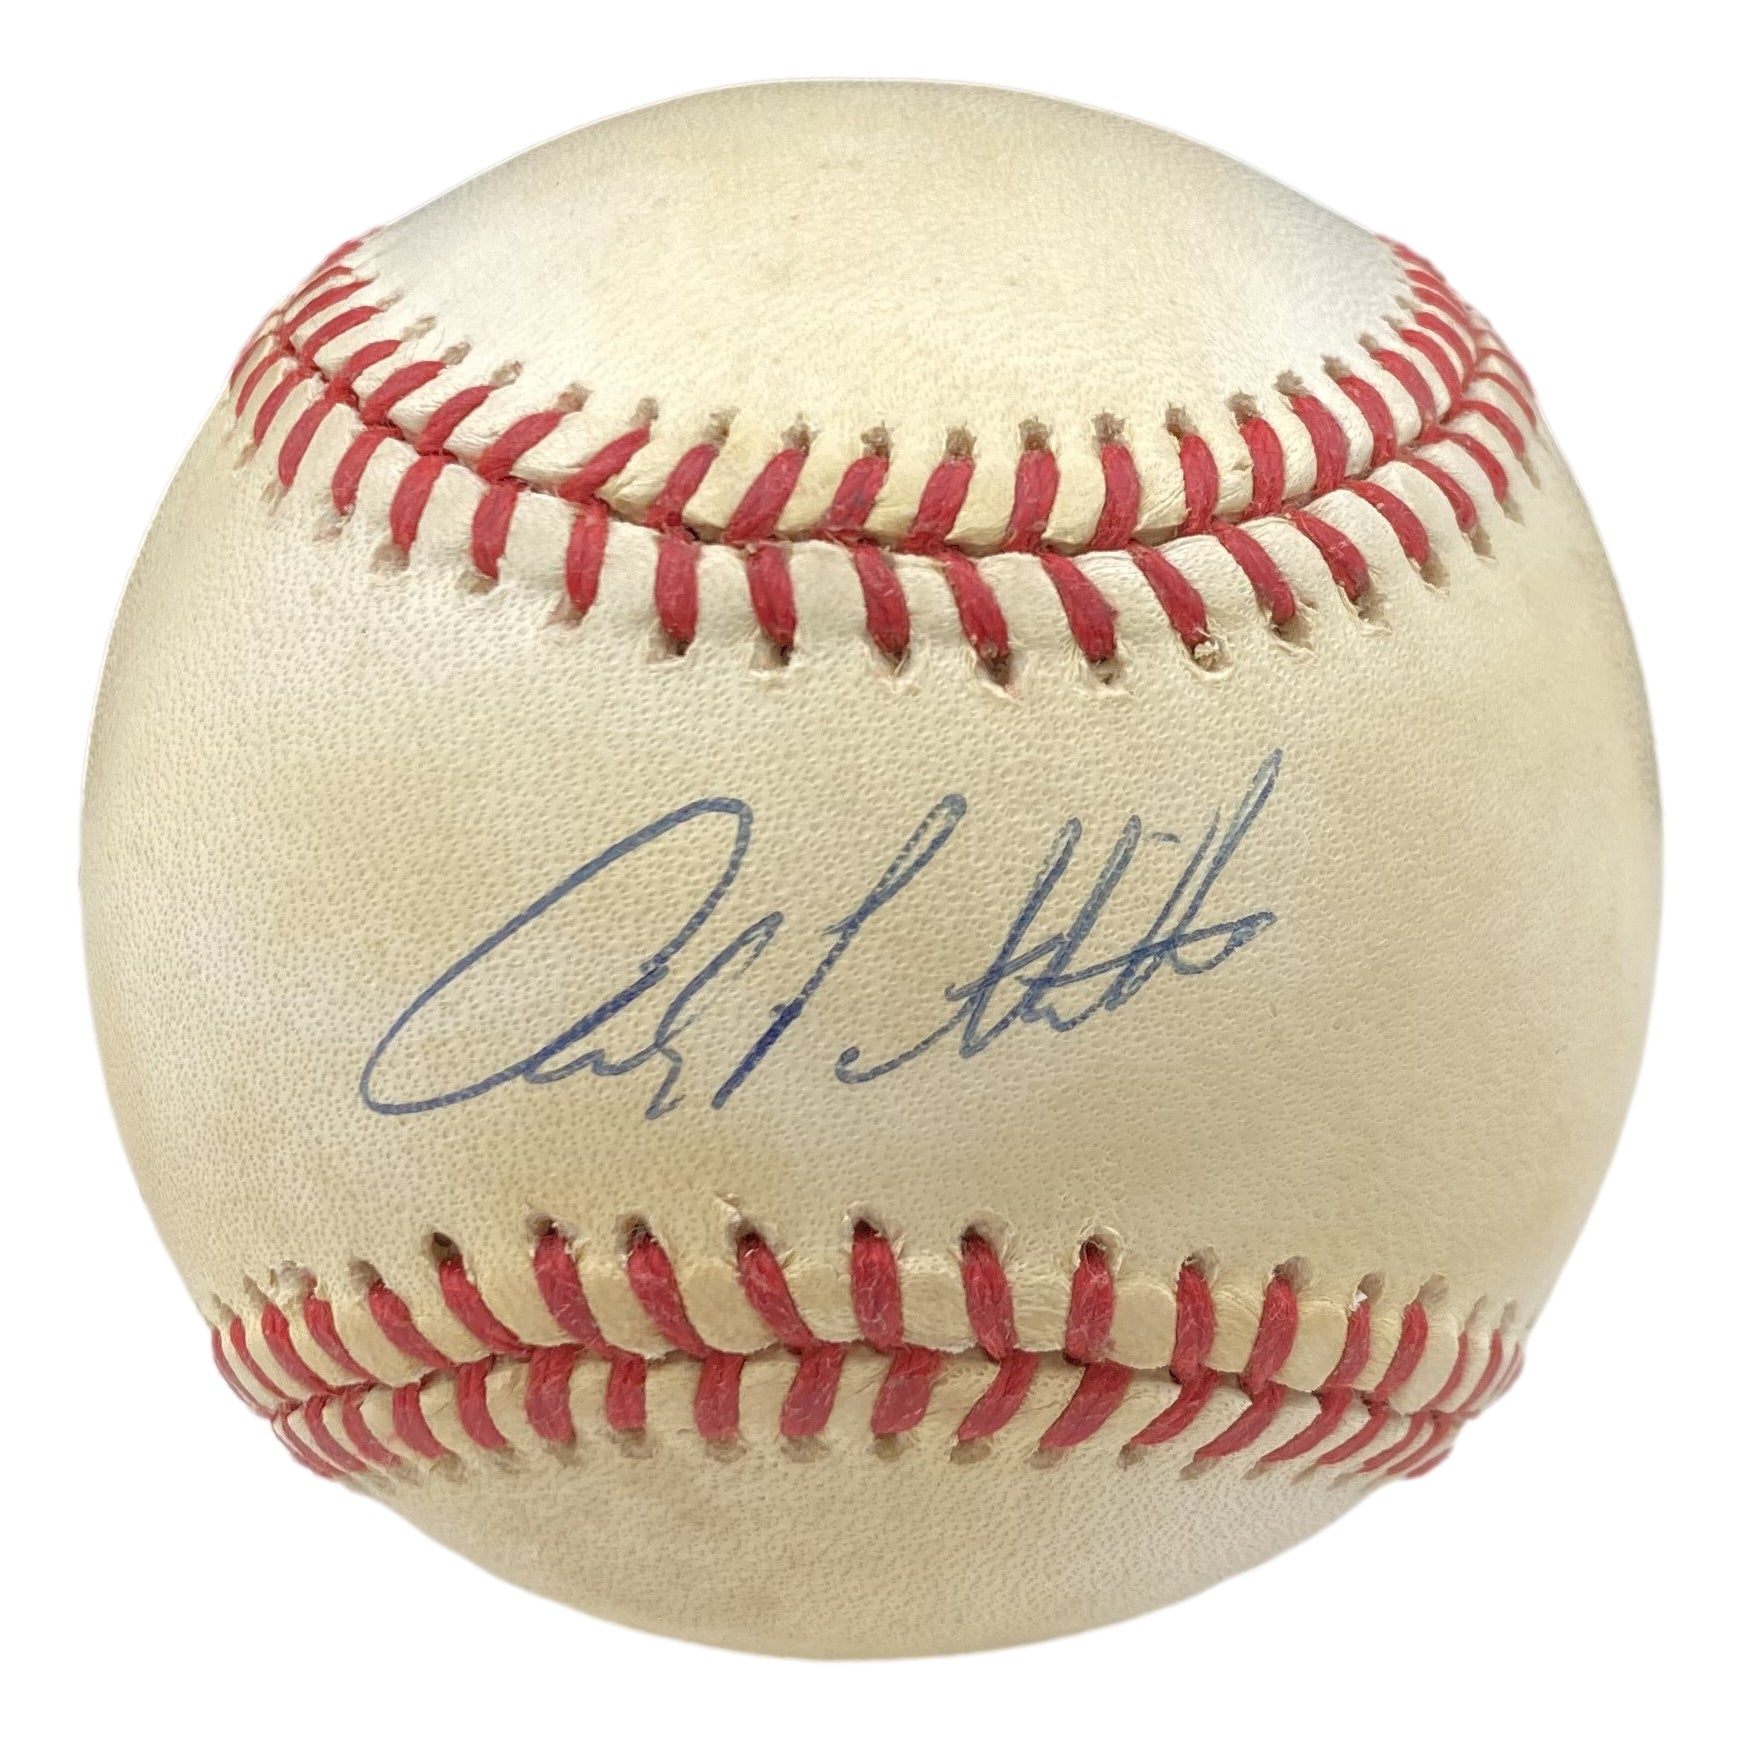 Andy Pettitte New York Yankees Signed 1996 World Series Baseball